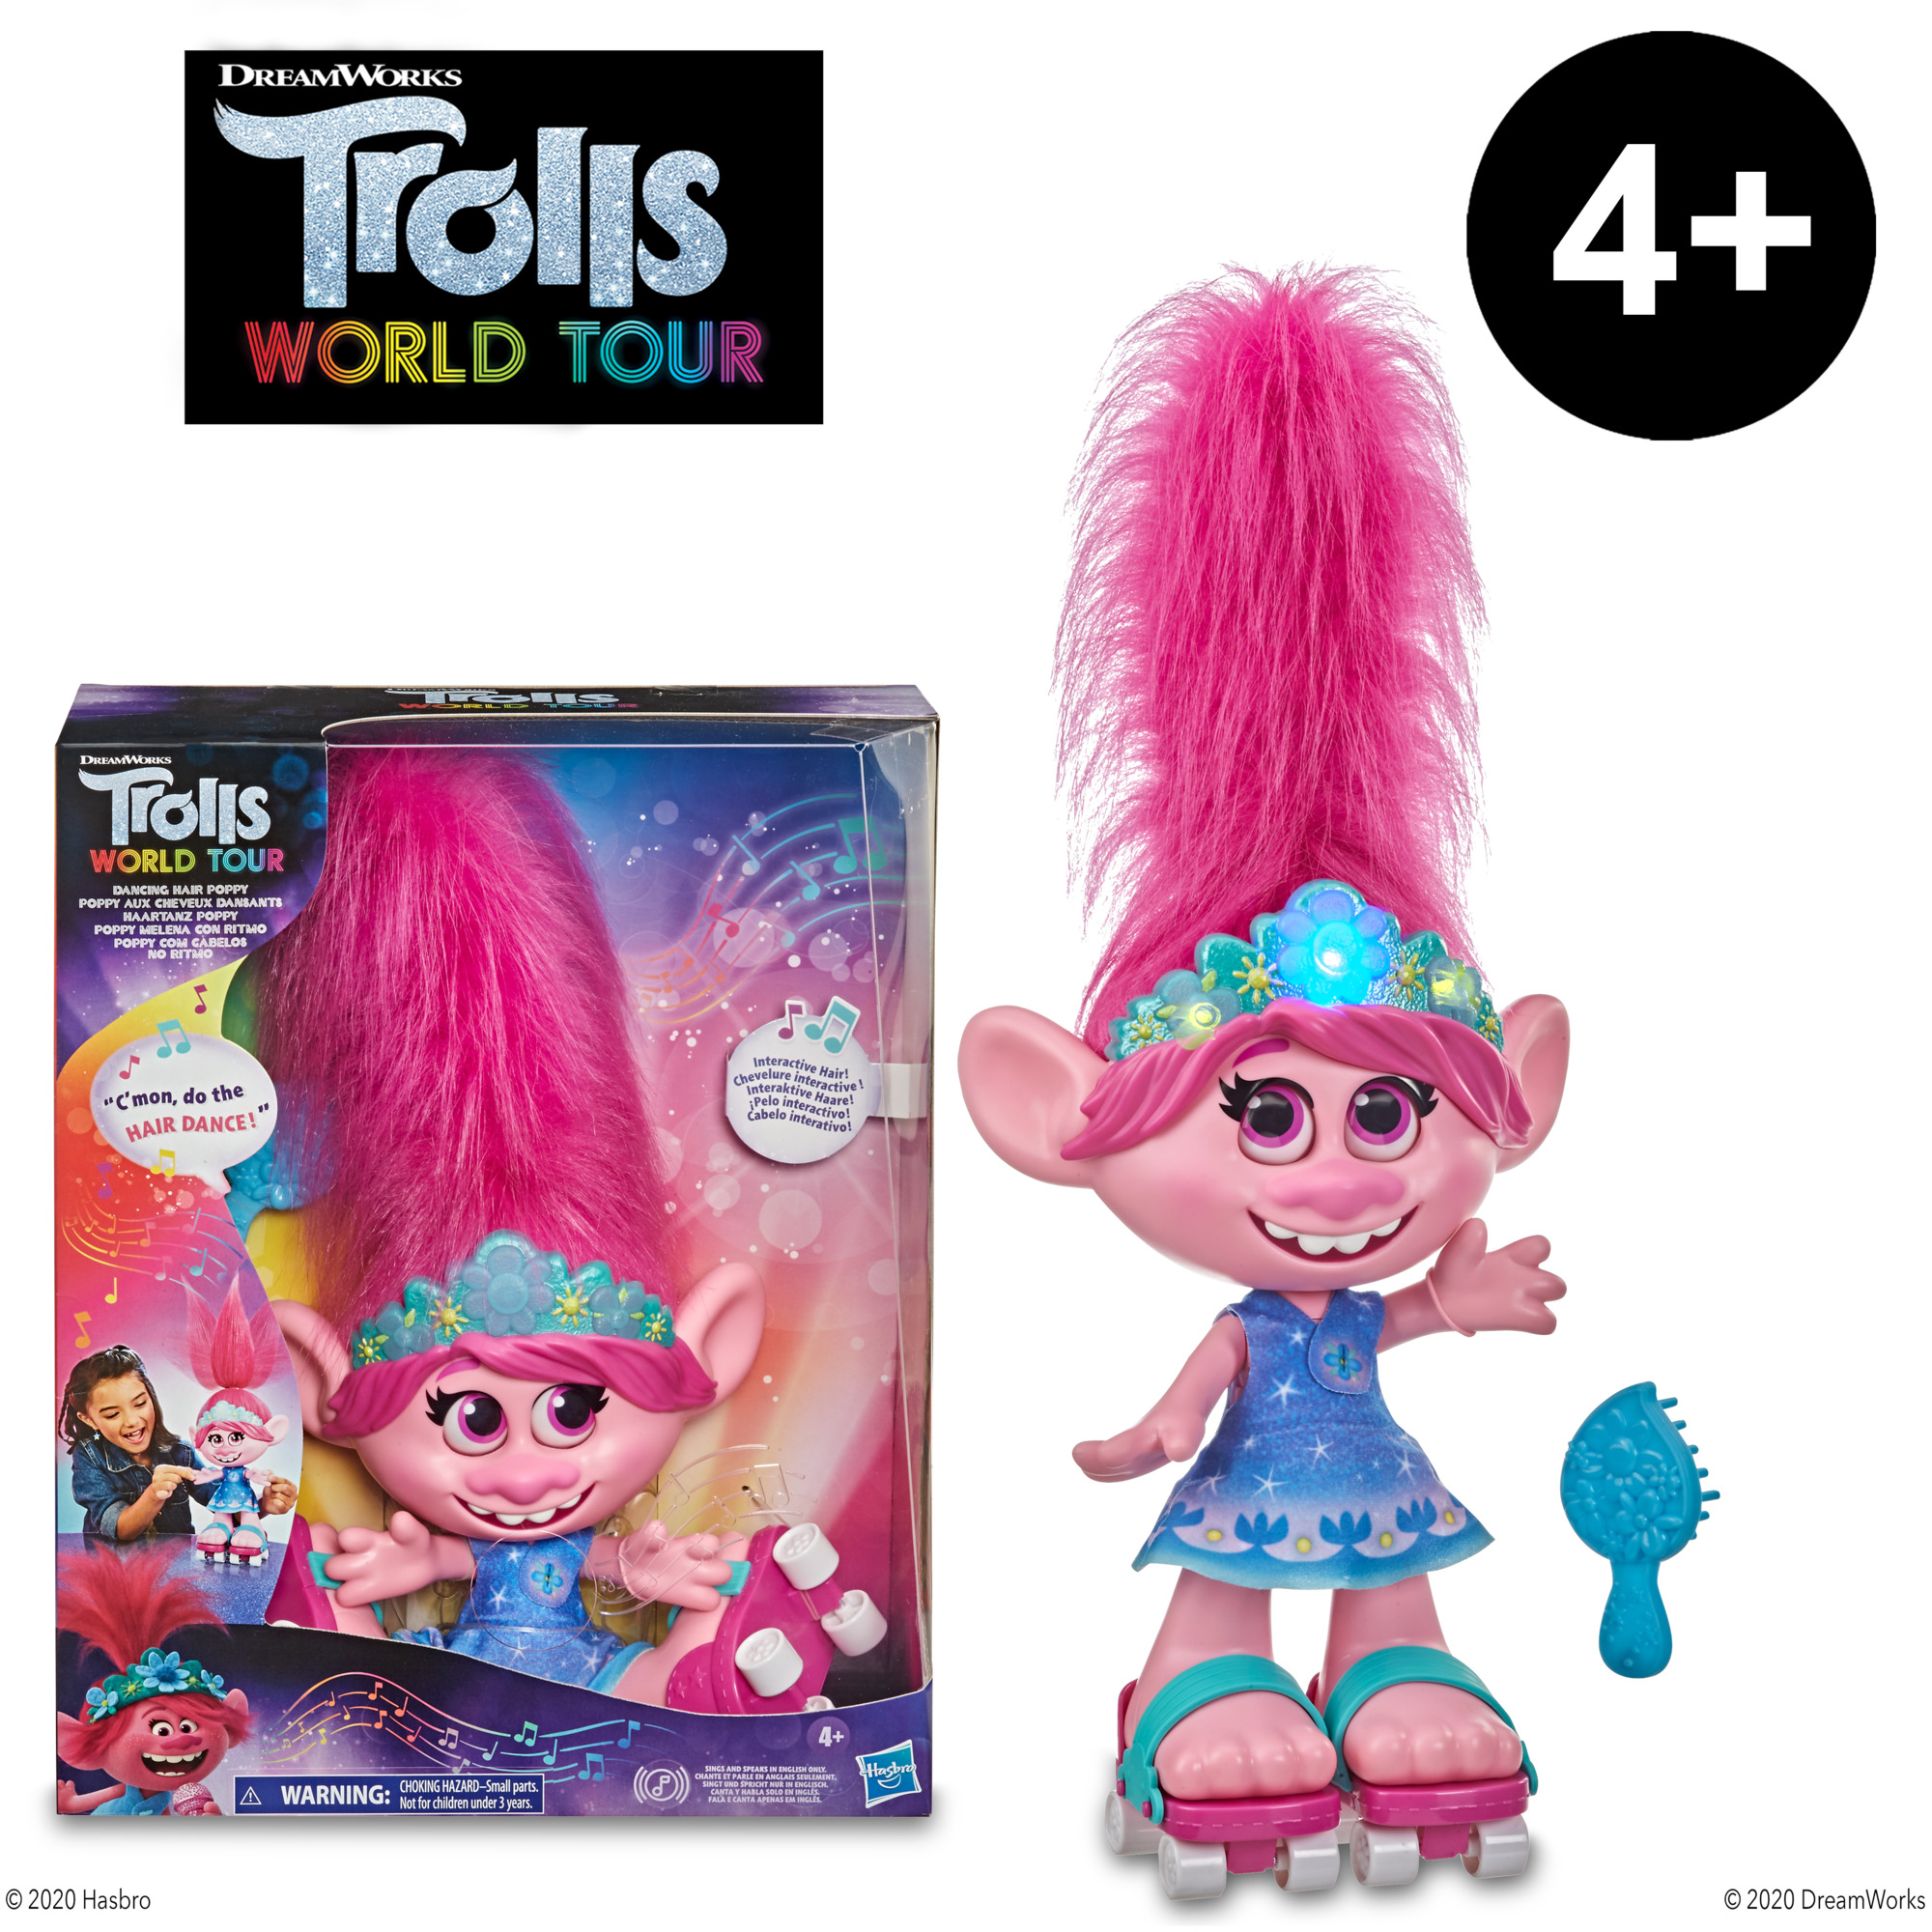 DreamWorks Trolls World Tour Dancing Hair Poppy, Doll Sings 2 Movie Songs - image 5 of 8